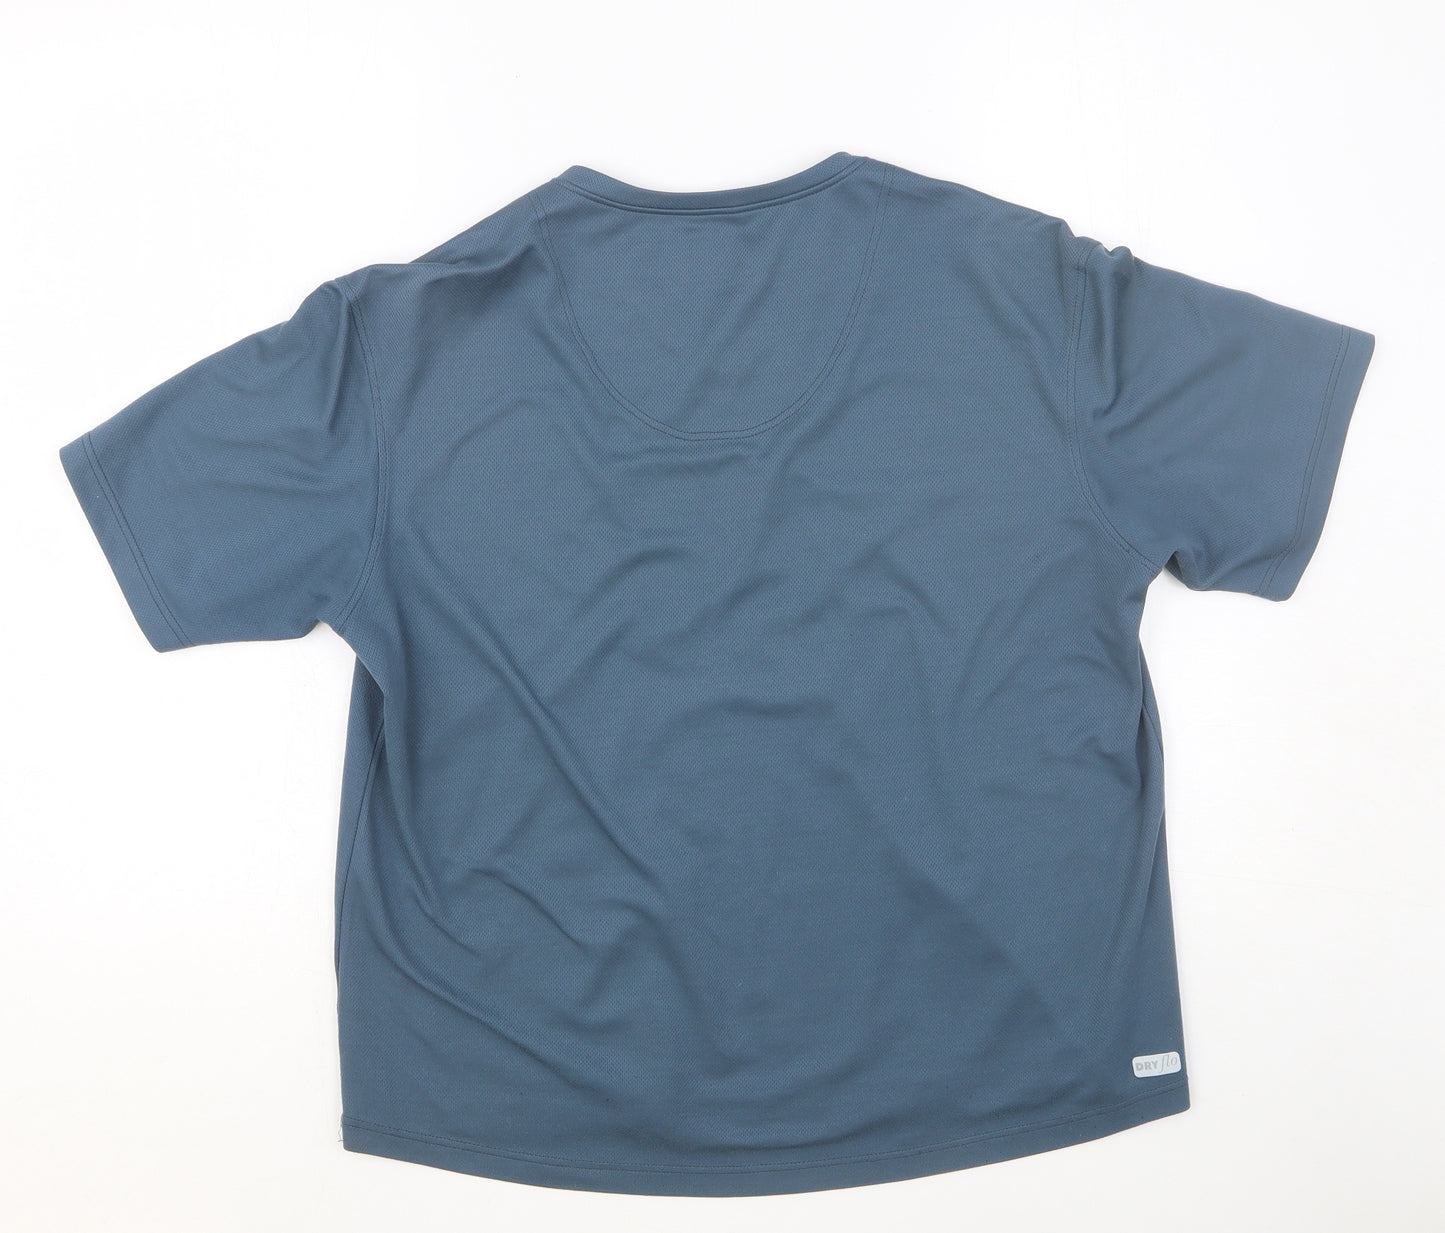 Lowe Alpine Womens Blue Polyester Basic T-Shirt Size L V-Neck - Dry Flo